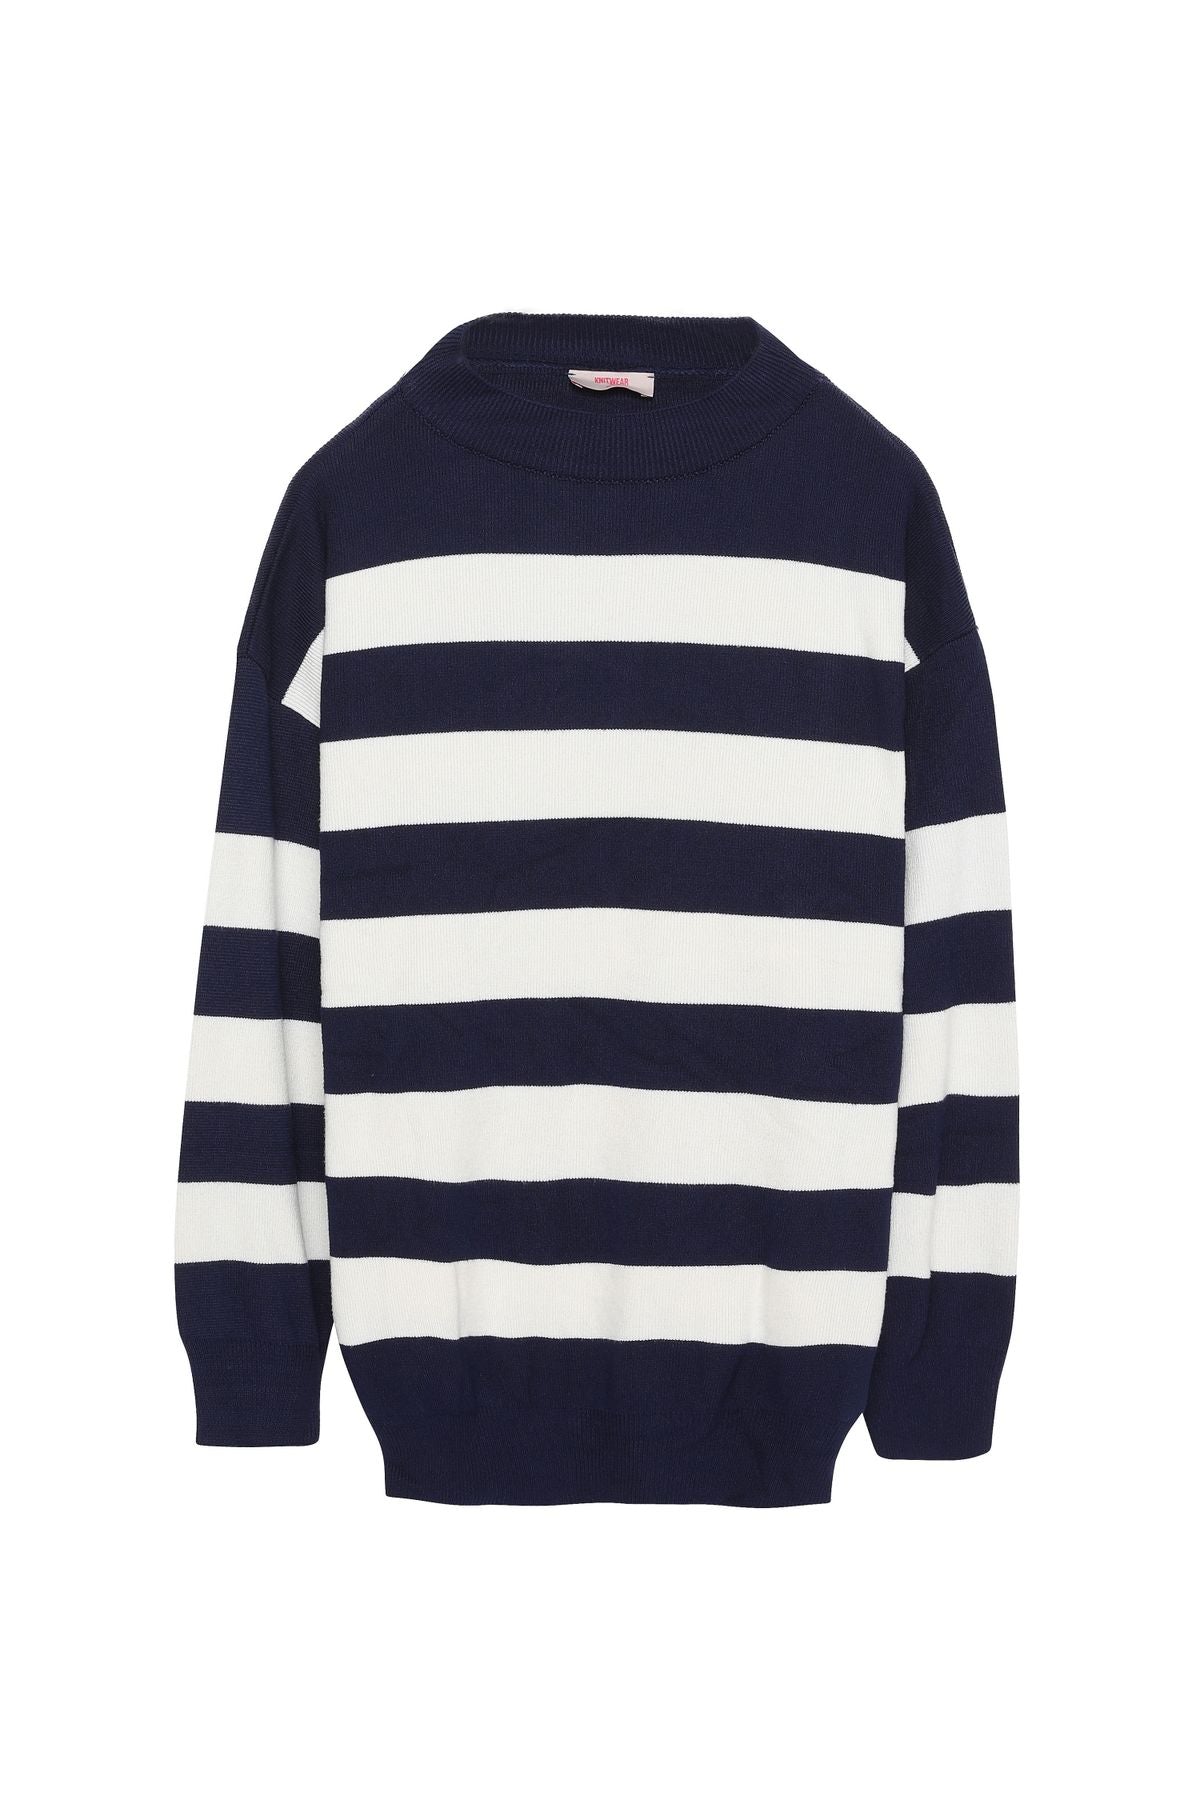 Color Blocked Knitwear Sweater Navy Blue-Cream